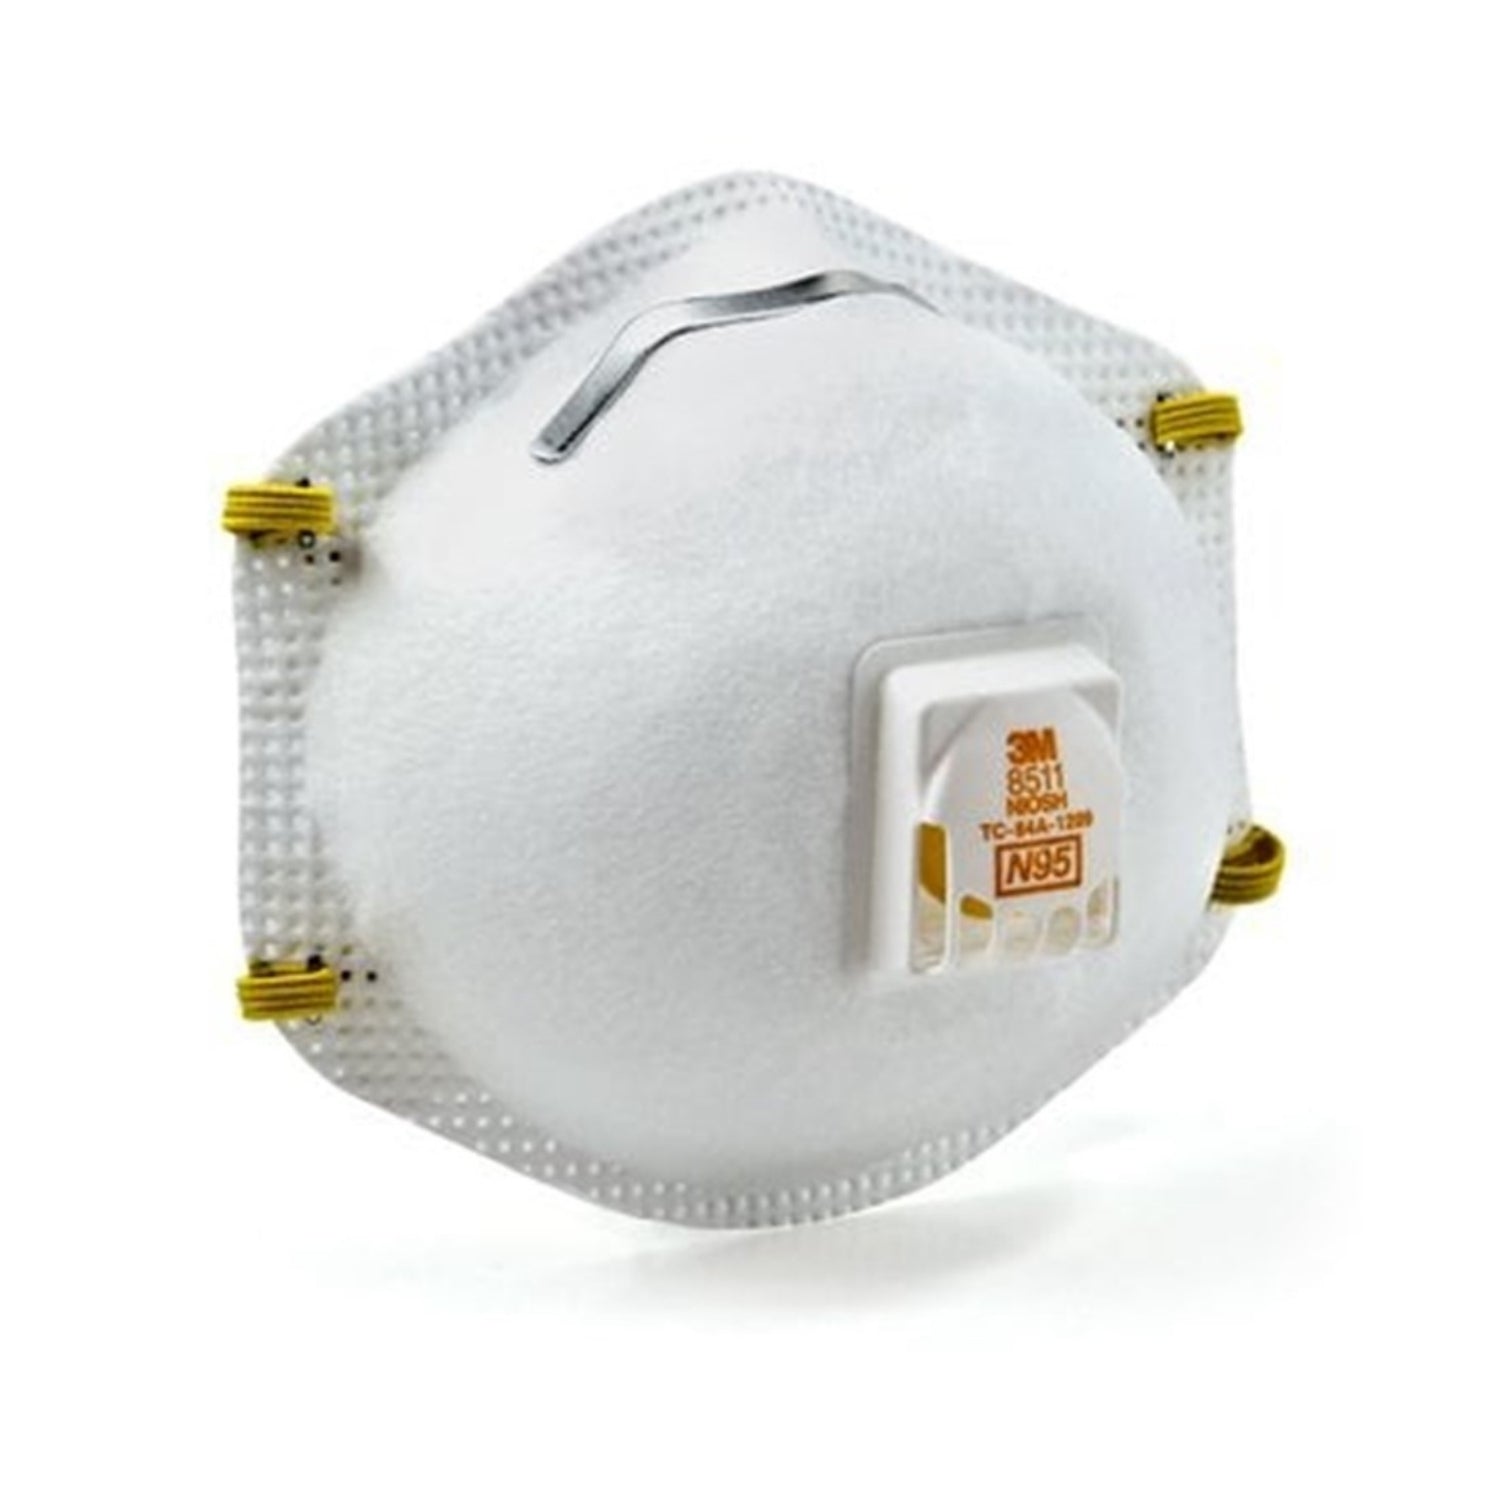 3M™ Particulate Respirator 8511, N95